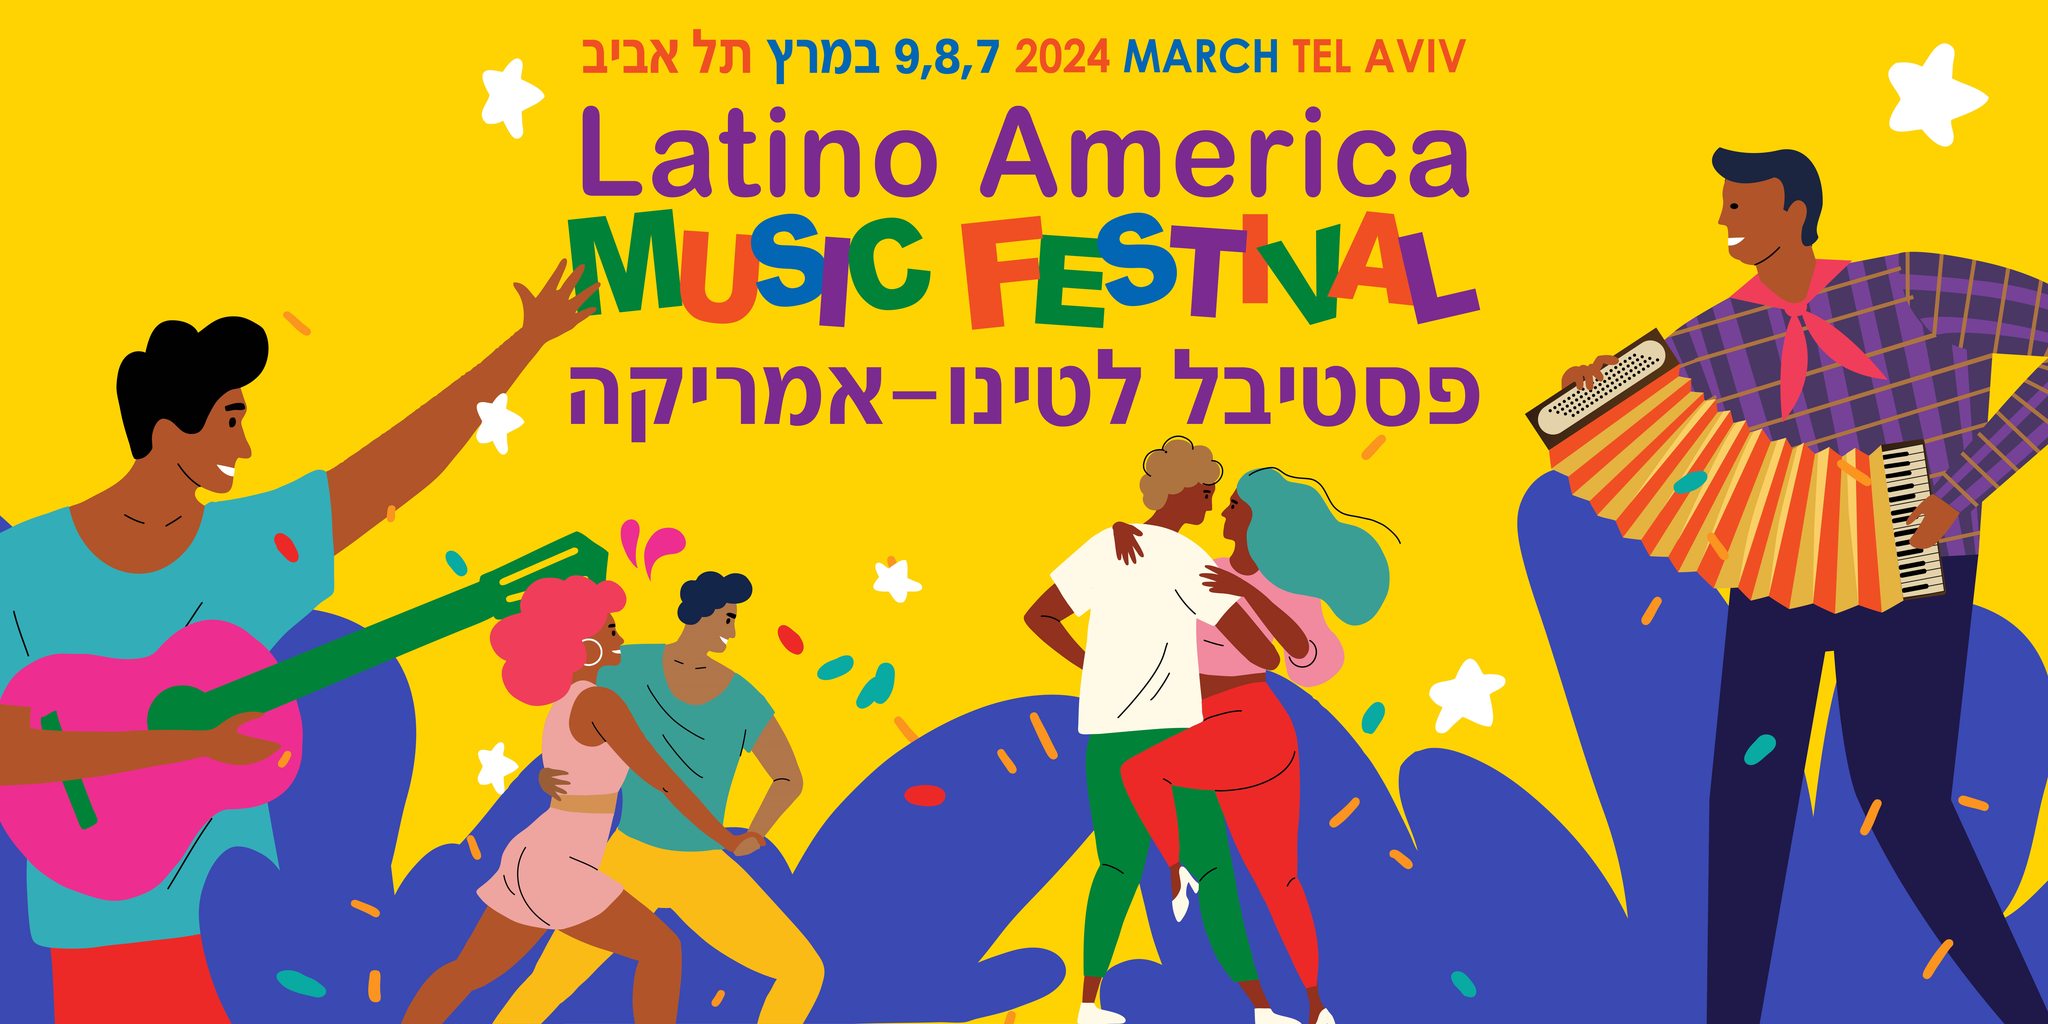 Latino America Music Festival @ Tel Aviv Museum of Art